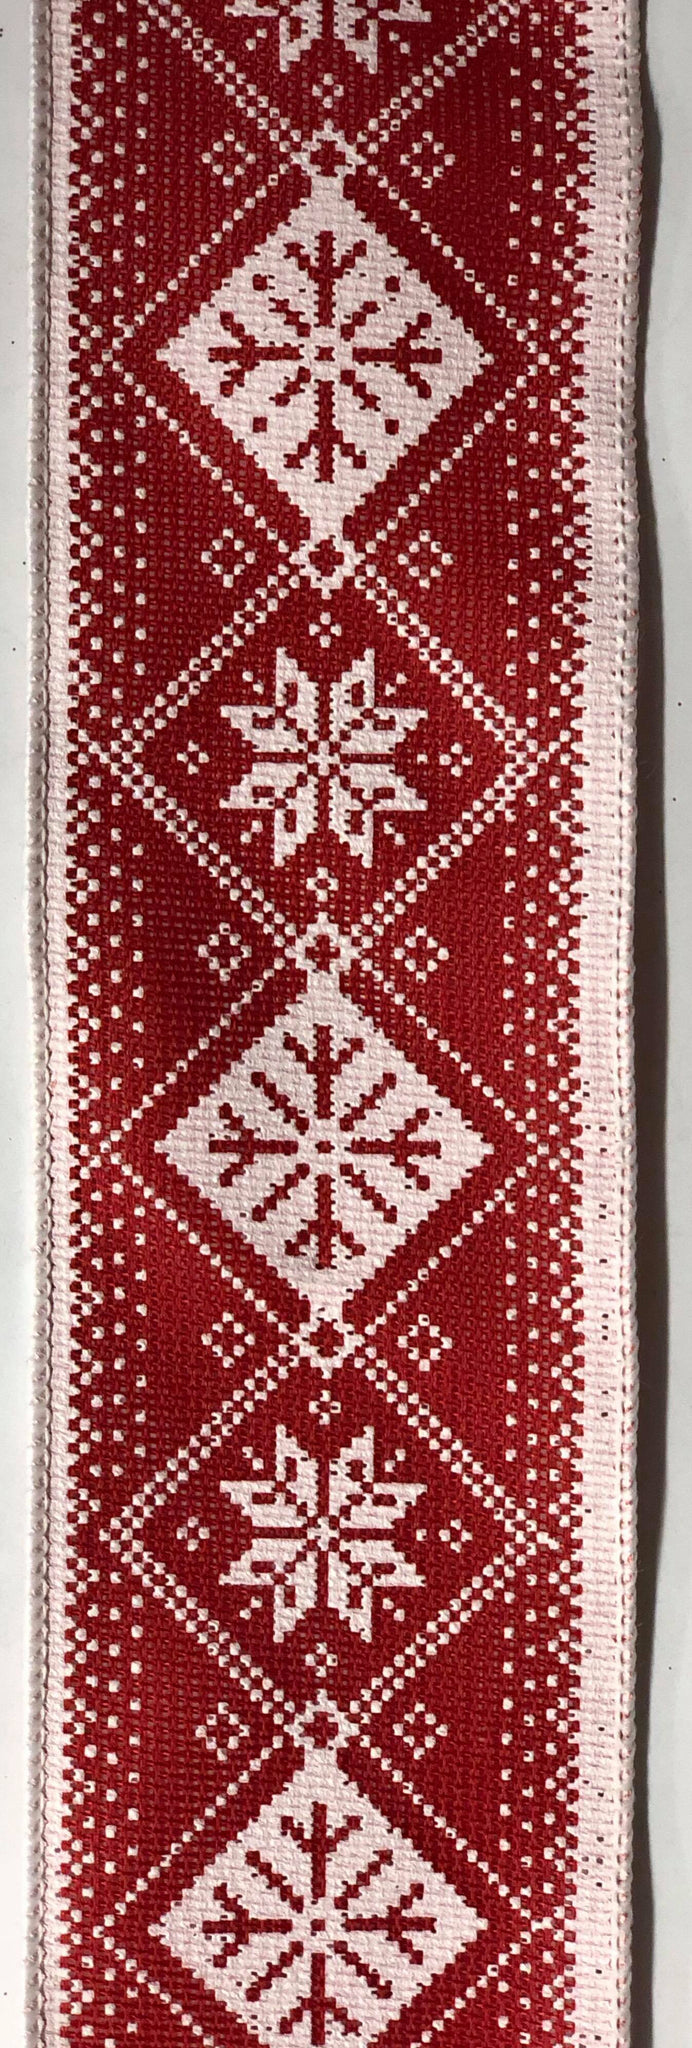 Stitched Snowflake